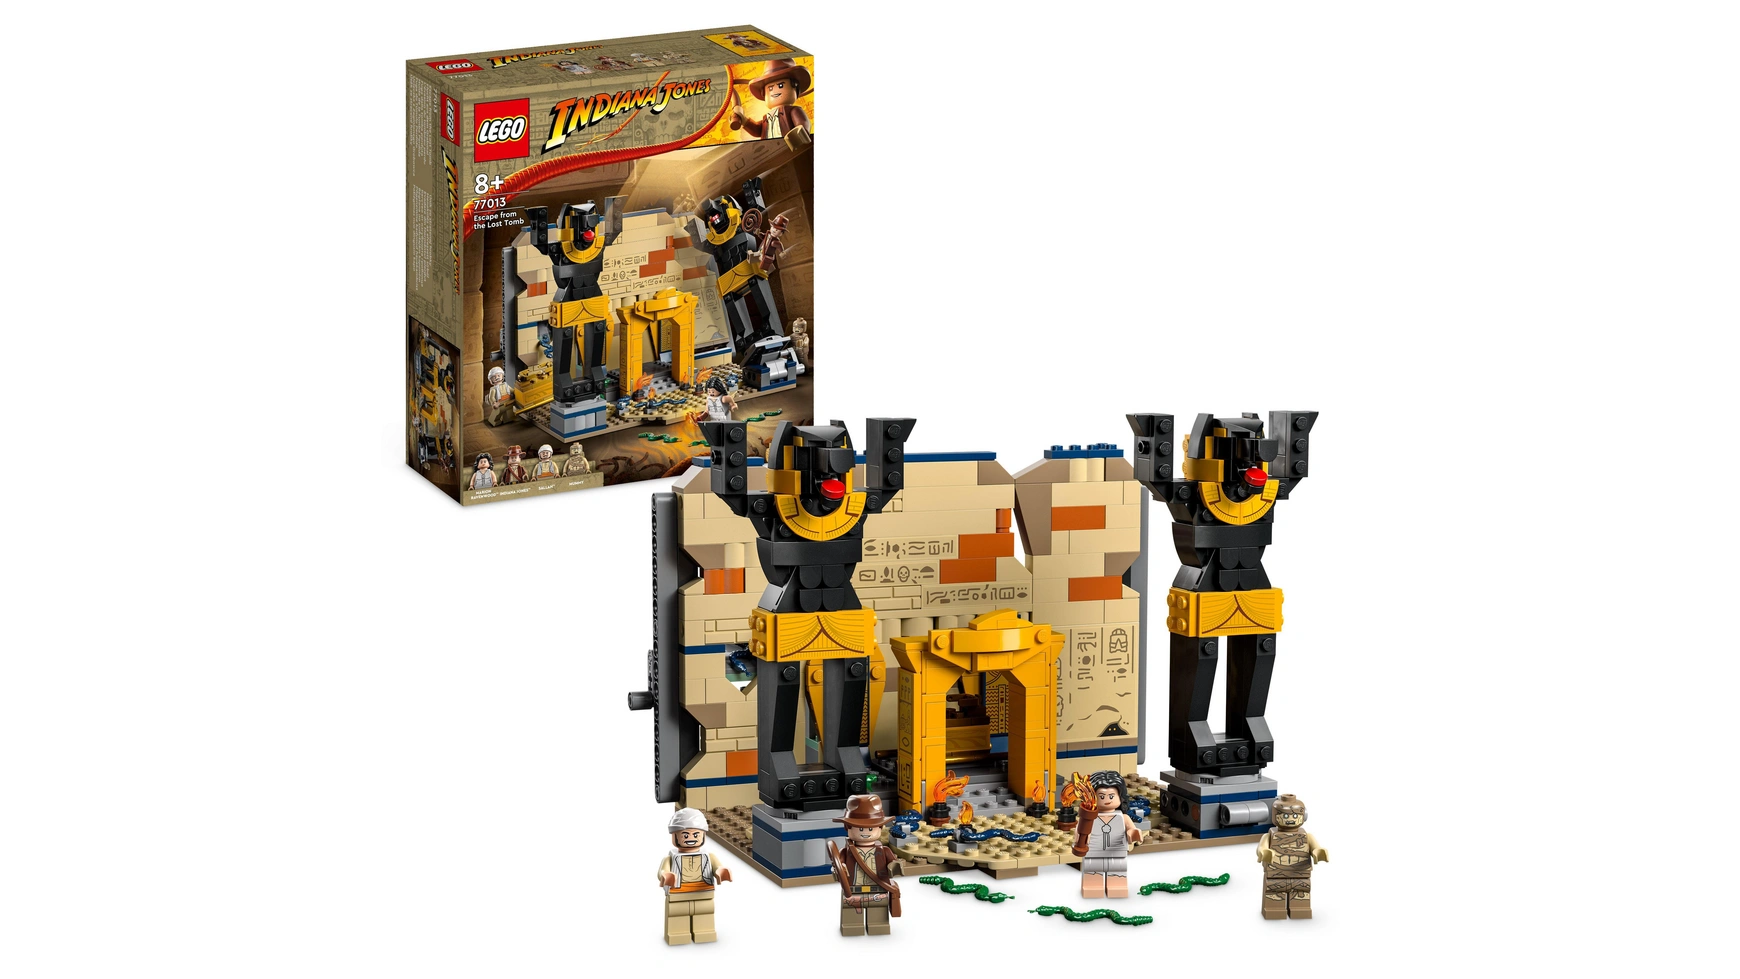 Lego Индиана Джонс Побег из гробницы lego 77015 индиана джонс храм золотого идола